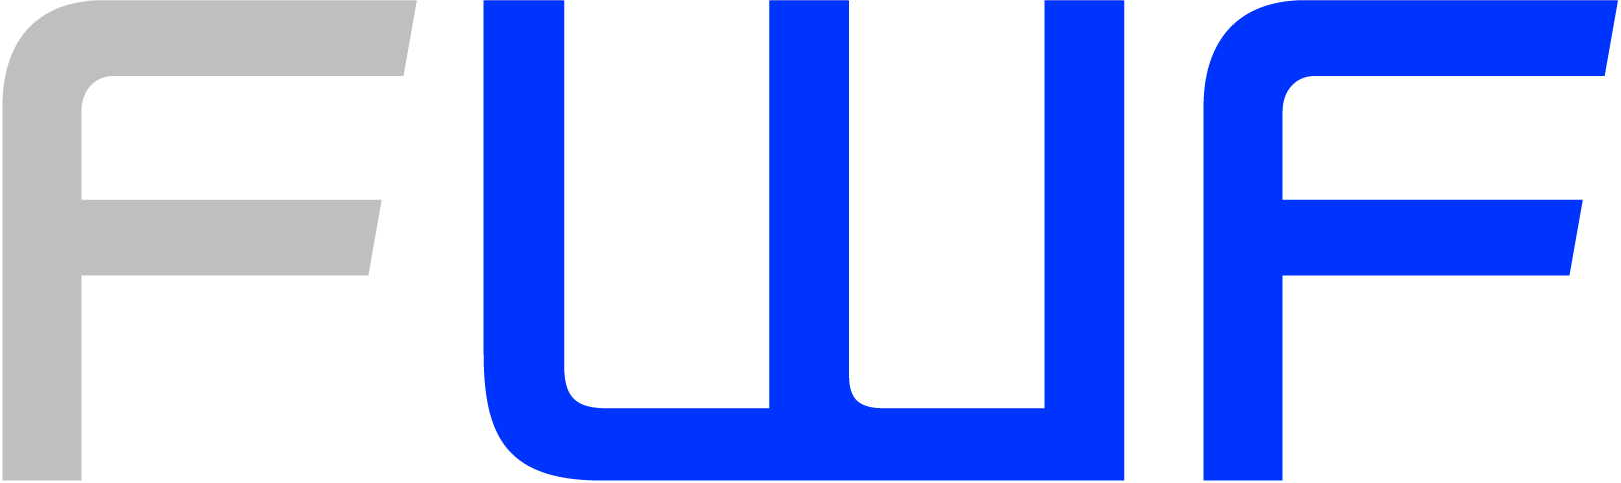 Funder logo